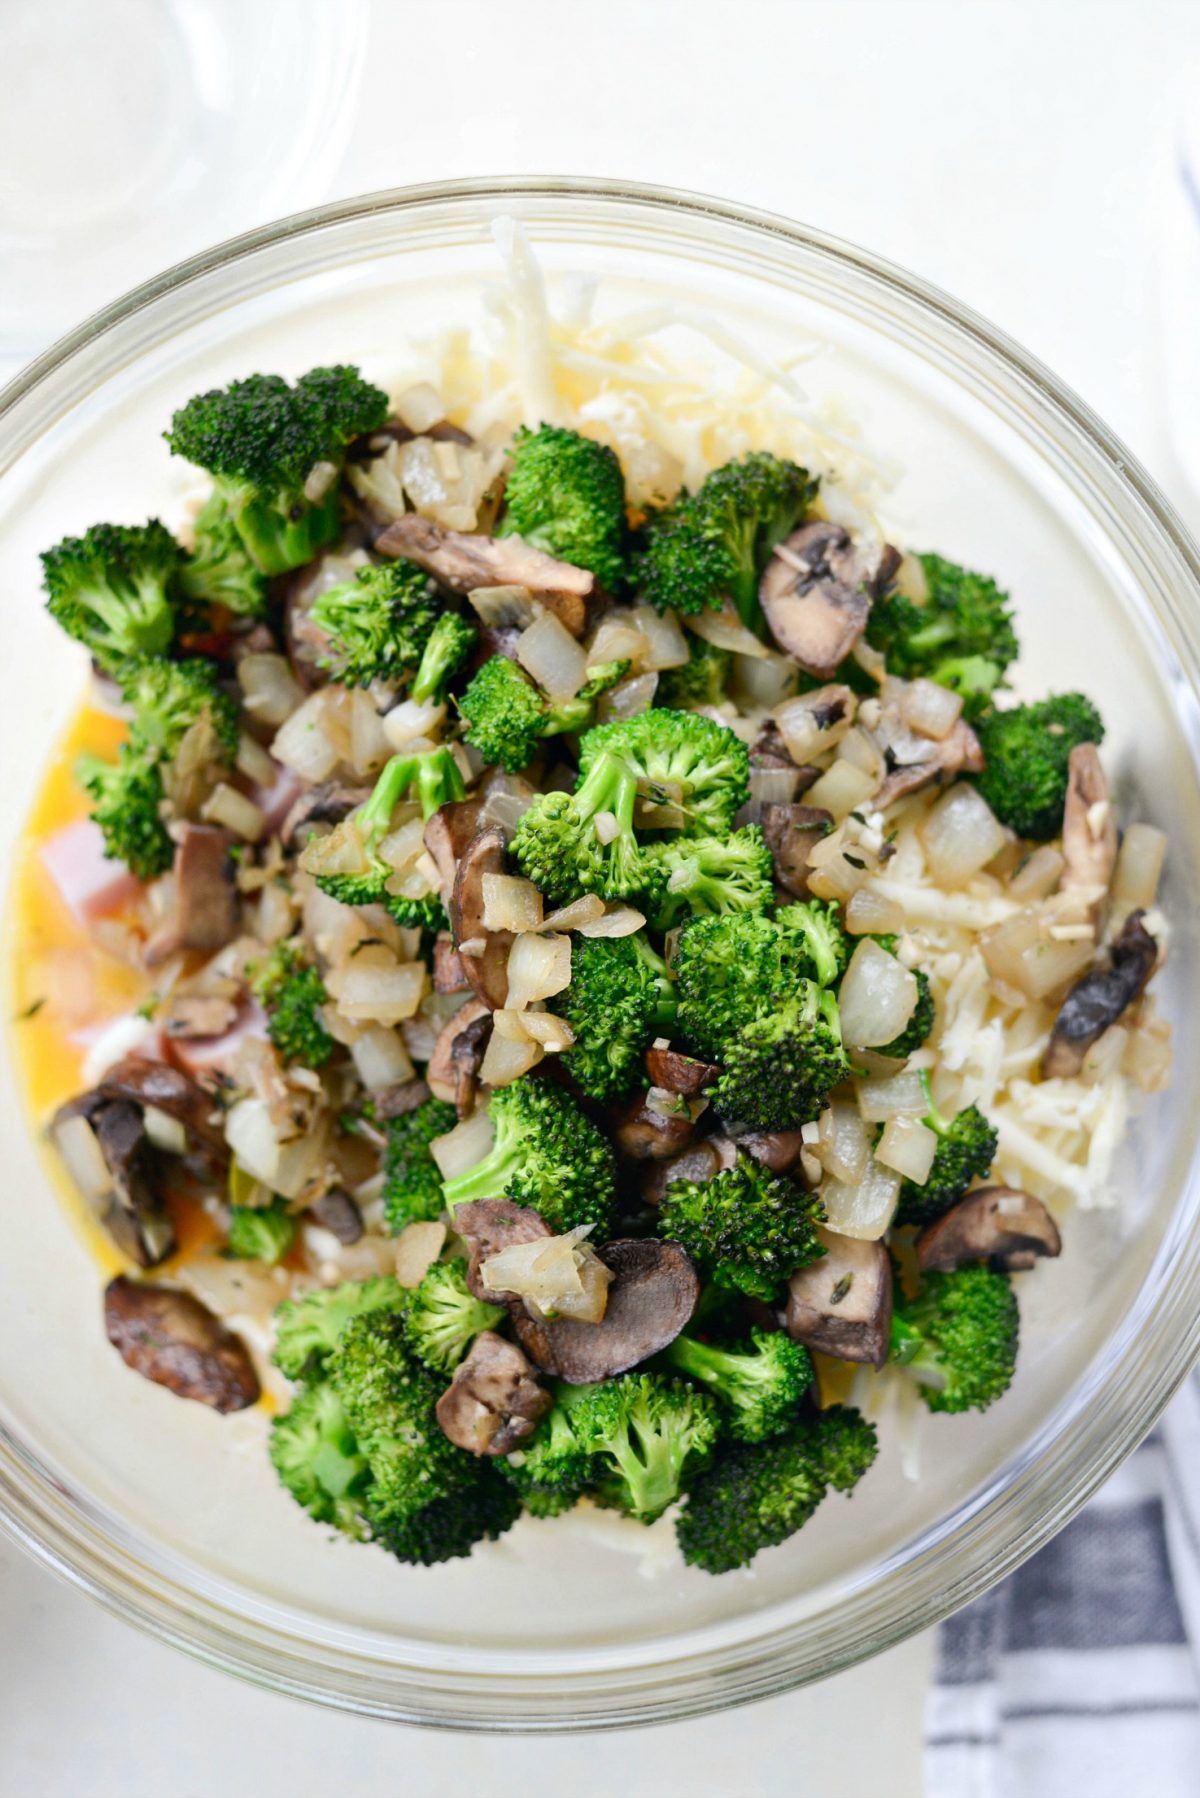 next add in the sautéed broccoli, onions and mushrooms.